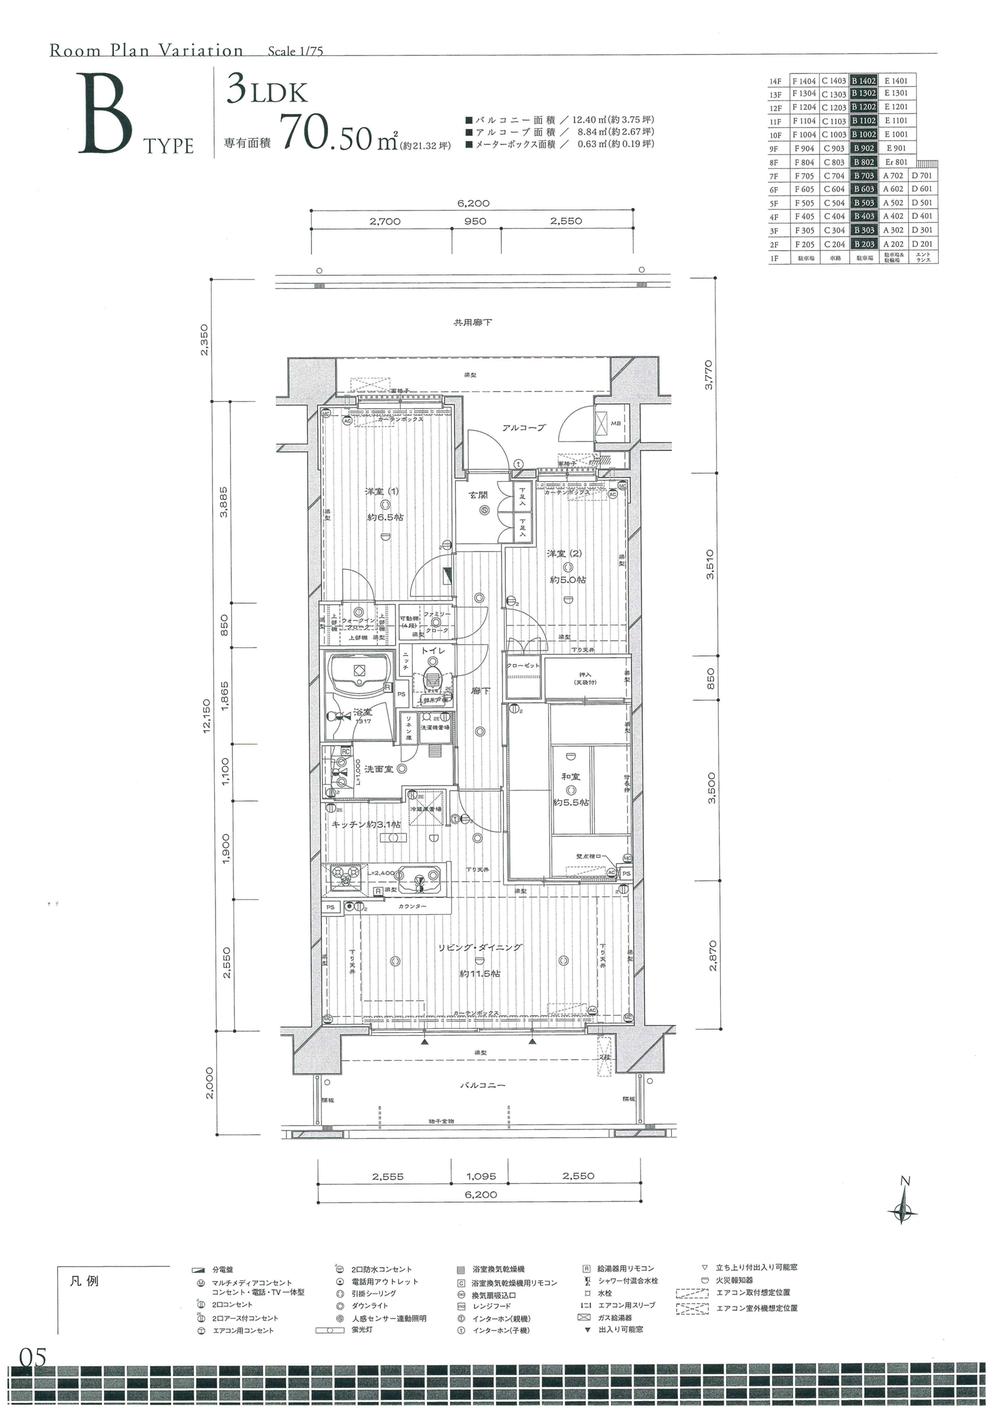 Floor plan. 3LDK, Price 19,800,000 yen, Footprint 70.5 sq m , Balcony area 12.4 sq m